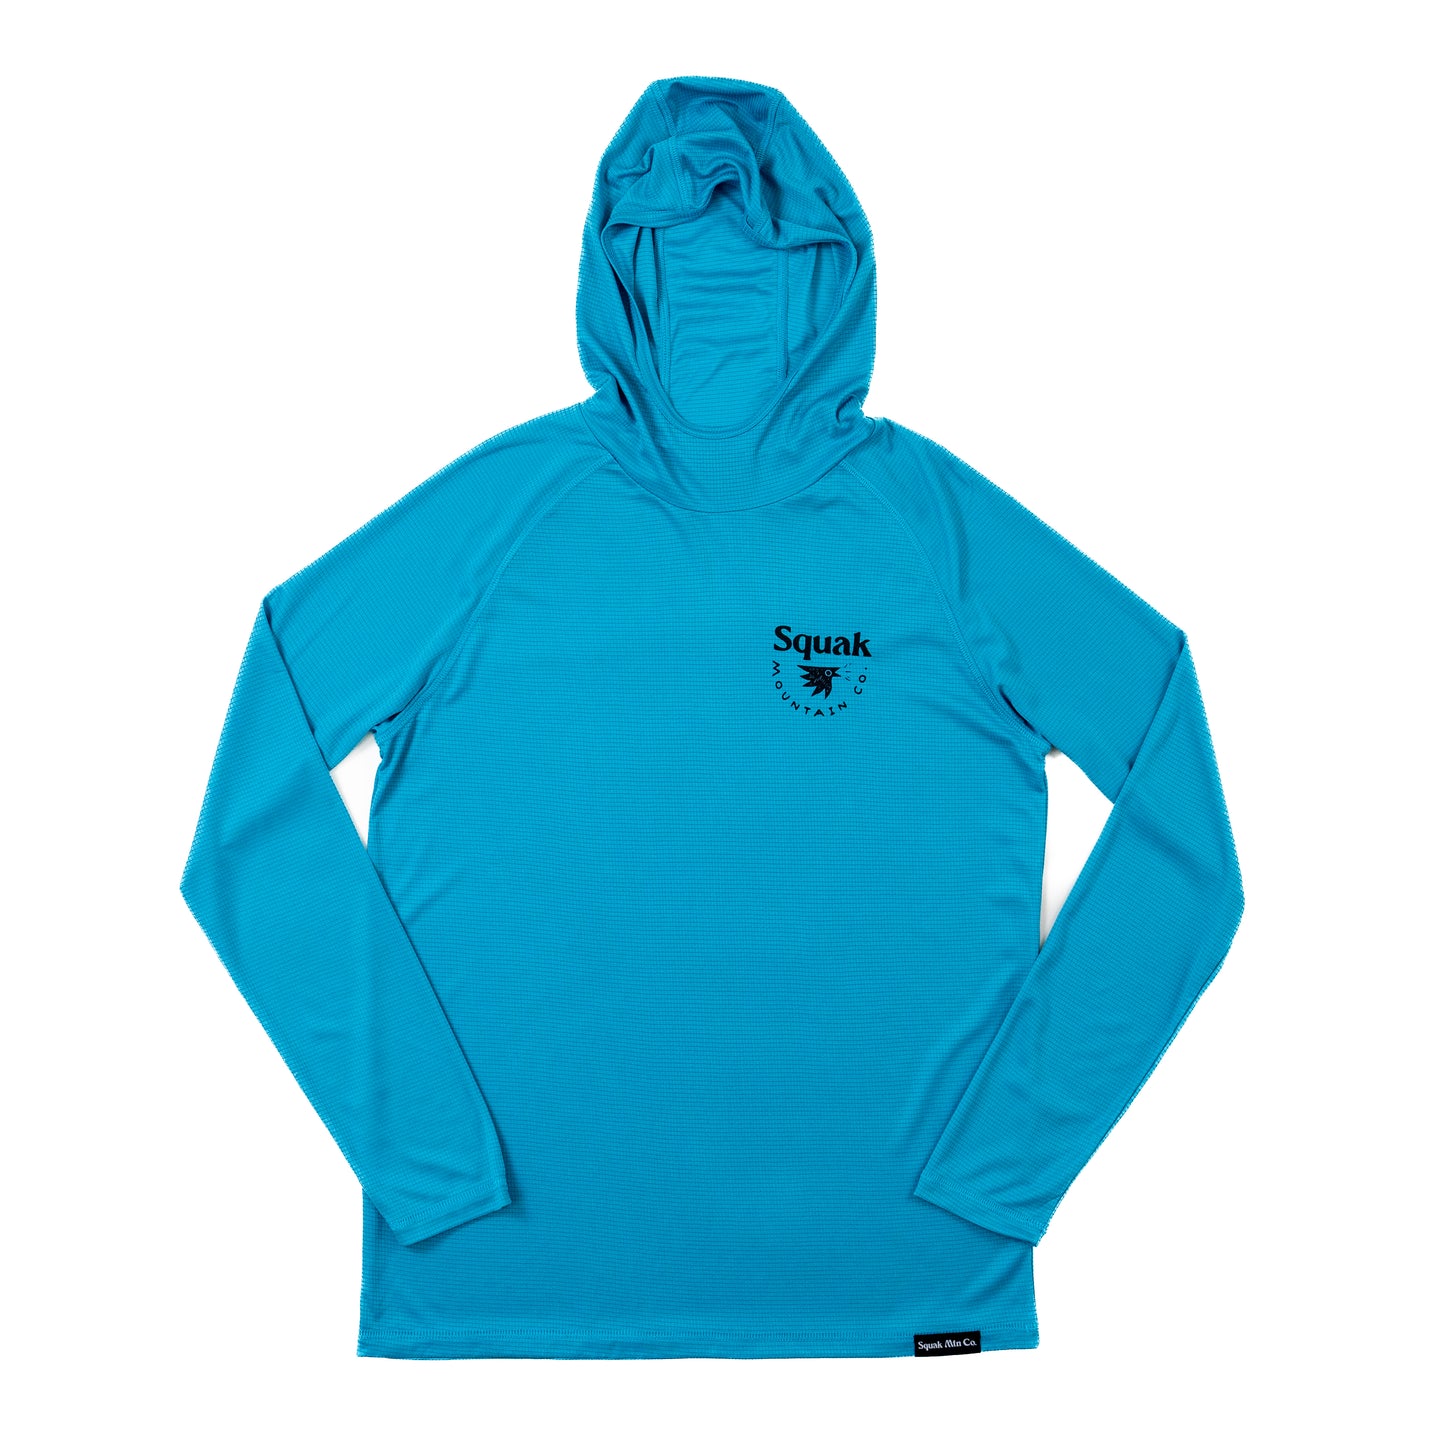 Aqua blue outdoor sun hoodie from Squak Mountain Co.